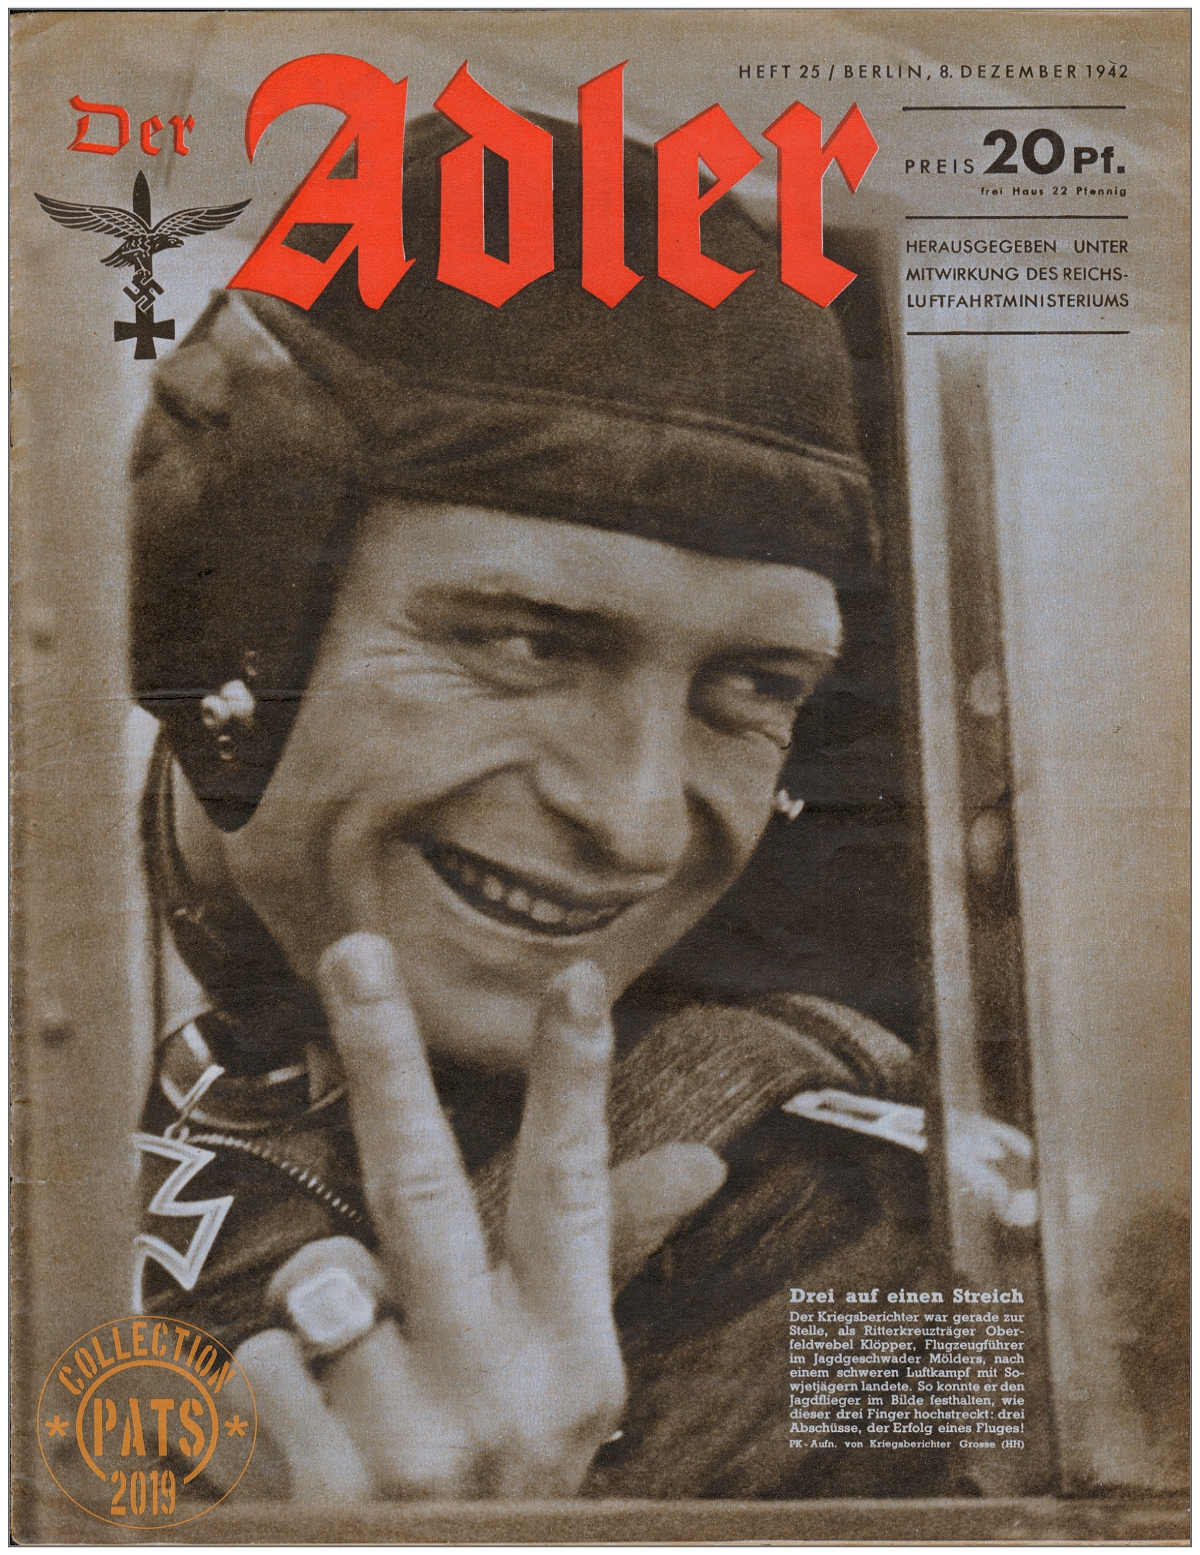 Der Adler - Heft 25 / Berlin - 12 Dezember 1942